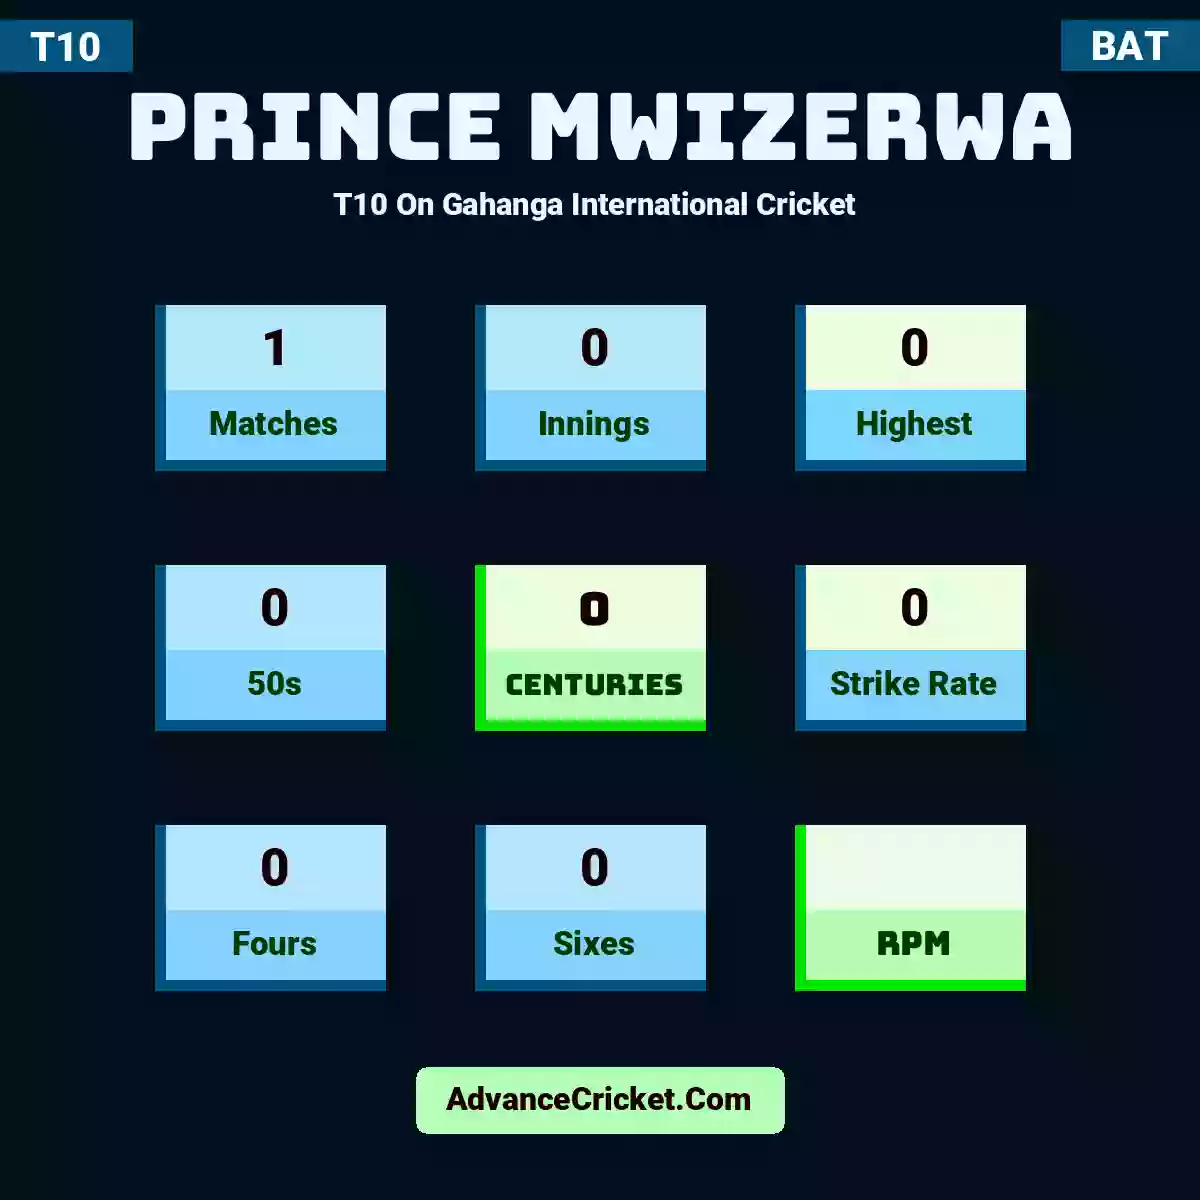 Prince Mwizerwa T10  On Gahanga International Cricket , Prince Mwizerwa played 1 matches, scored 0 runs as highest, 0 half-centuries, and 0 centuries, with a strike rate of 0. P.Mwizerwa hit 0 fours and 0 sixes.